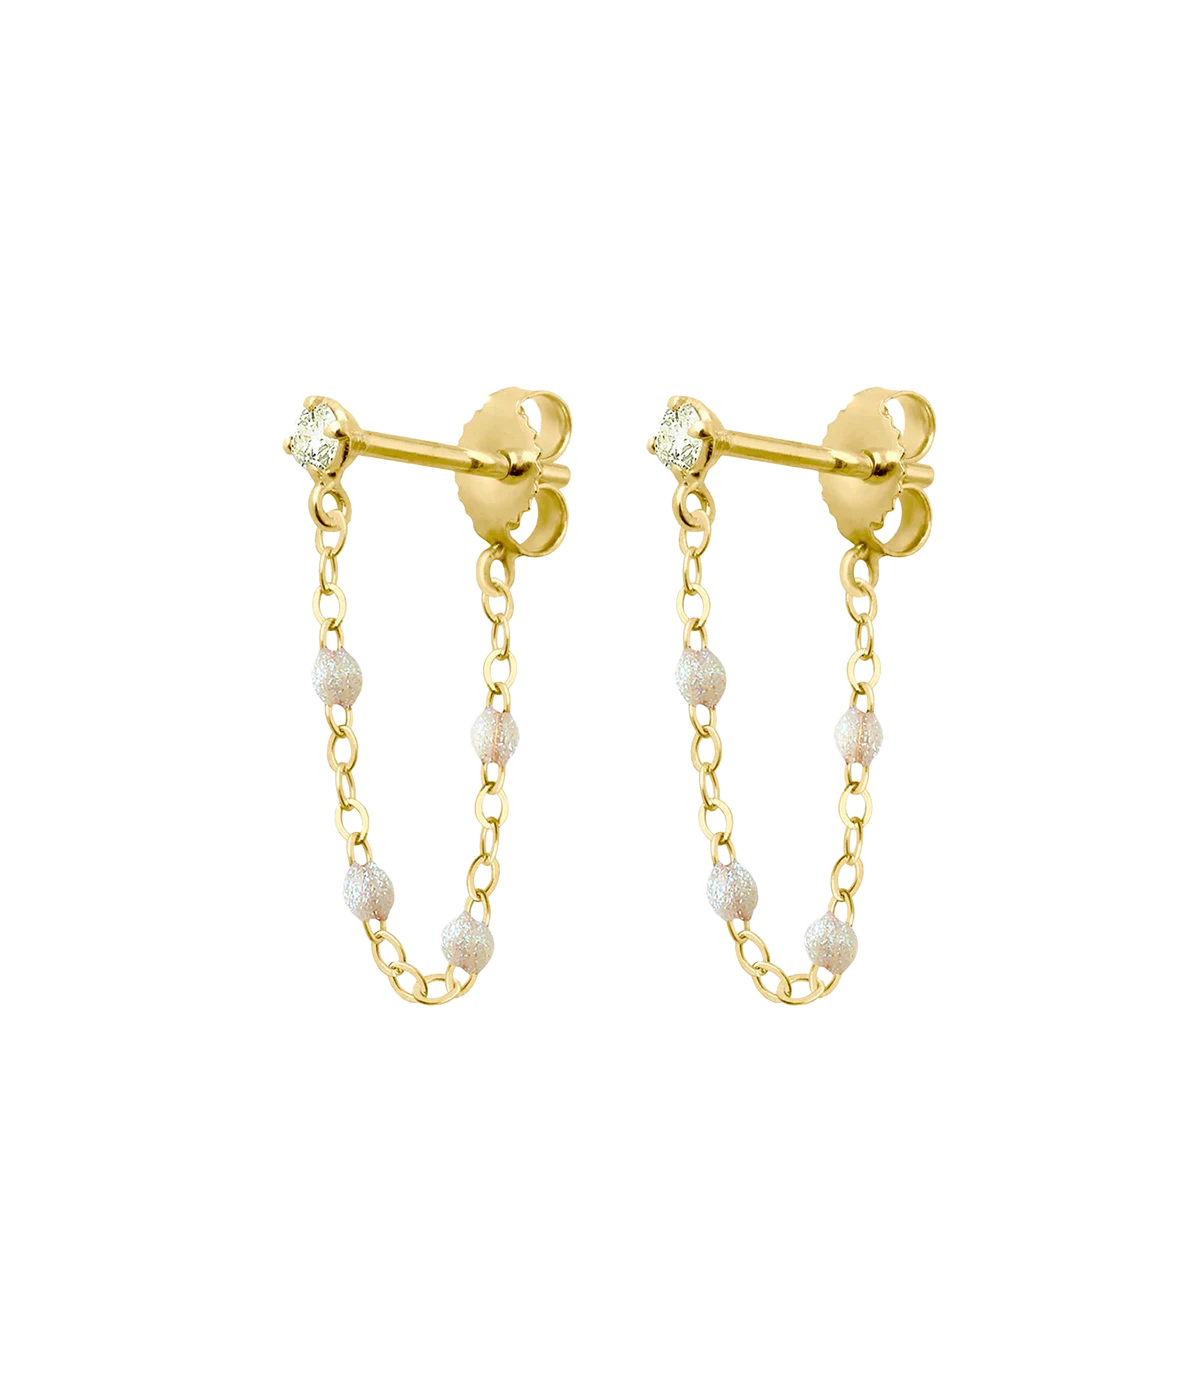 Gigi Supreme Earrings in 18K Yellow Gold, Opal & Diamond